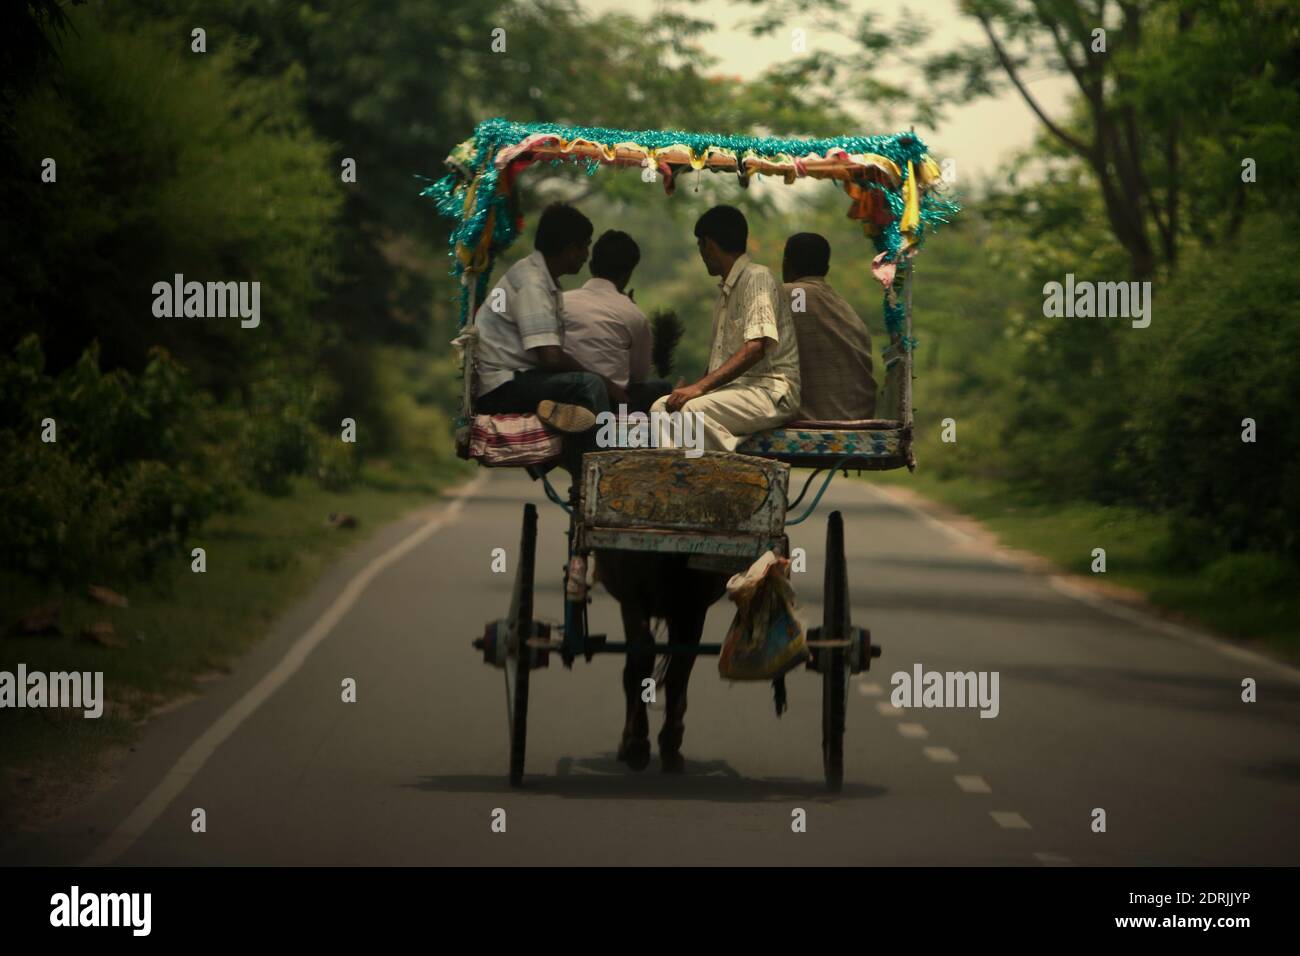 A tanga (horse-drawn hired vehicle) carrying passengers in Rajgir, Bihar, India. Stock Photo